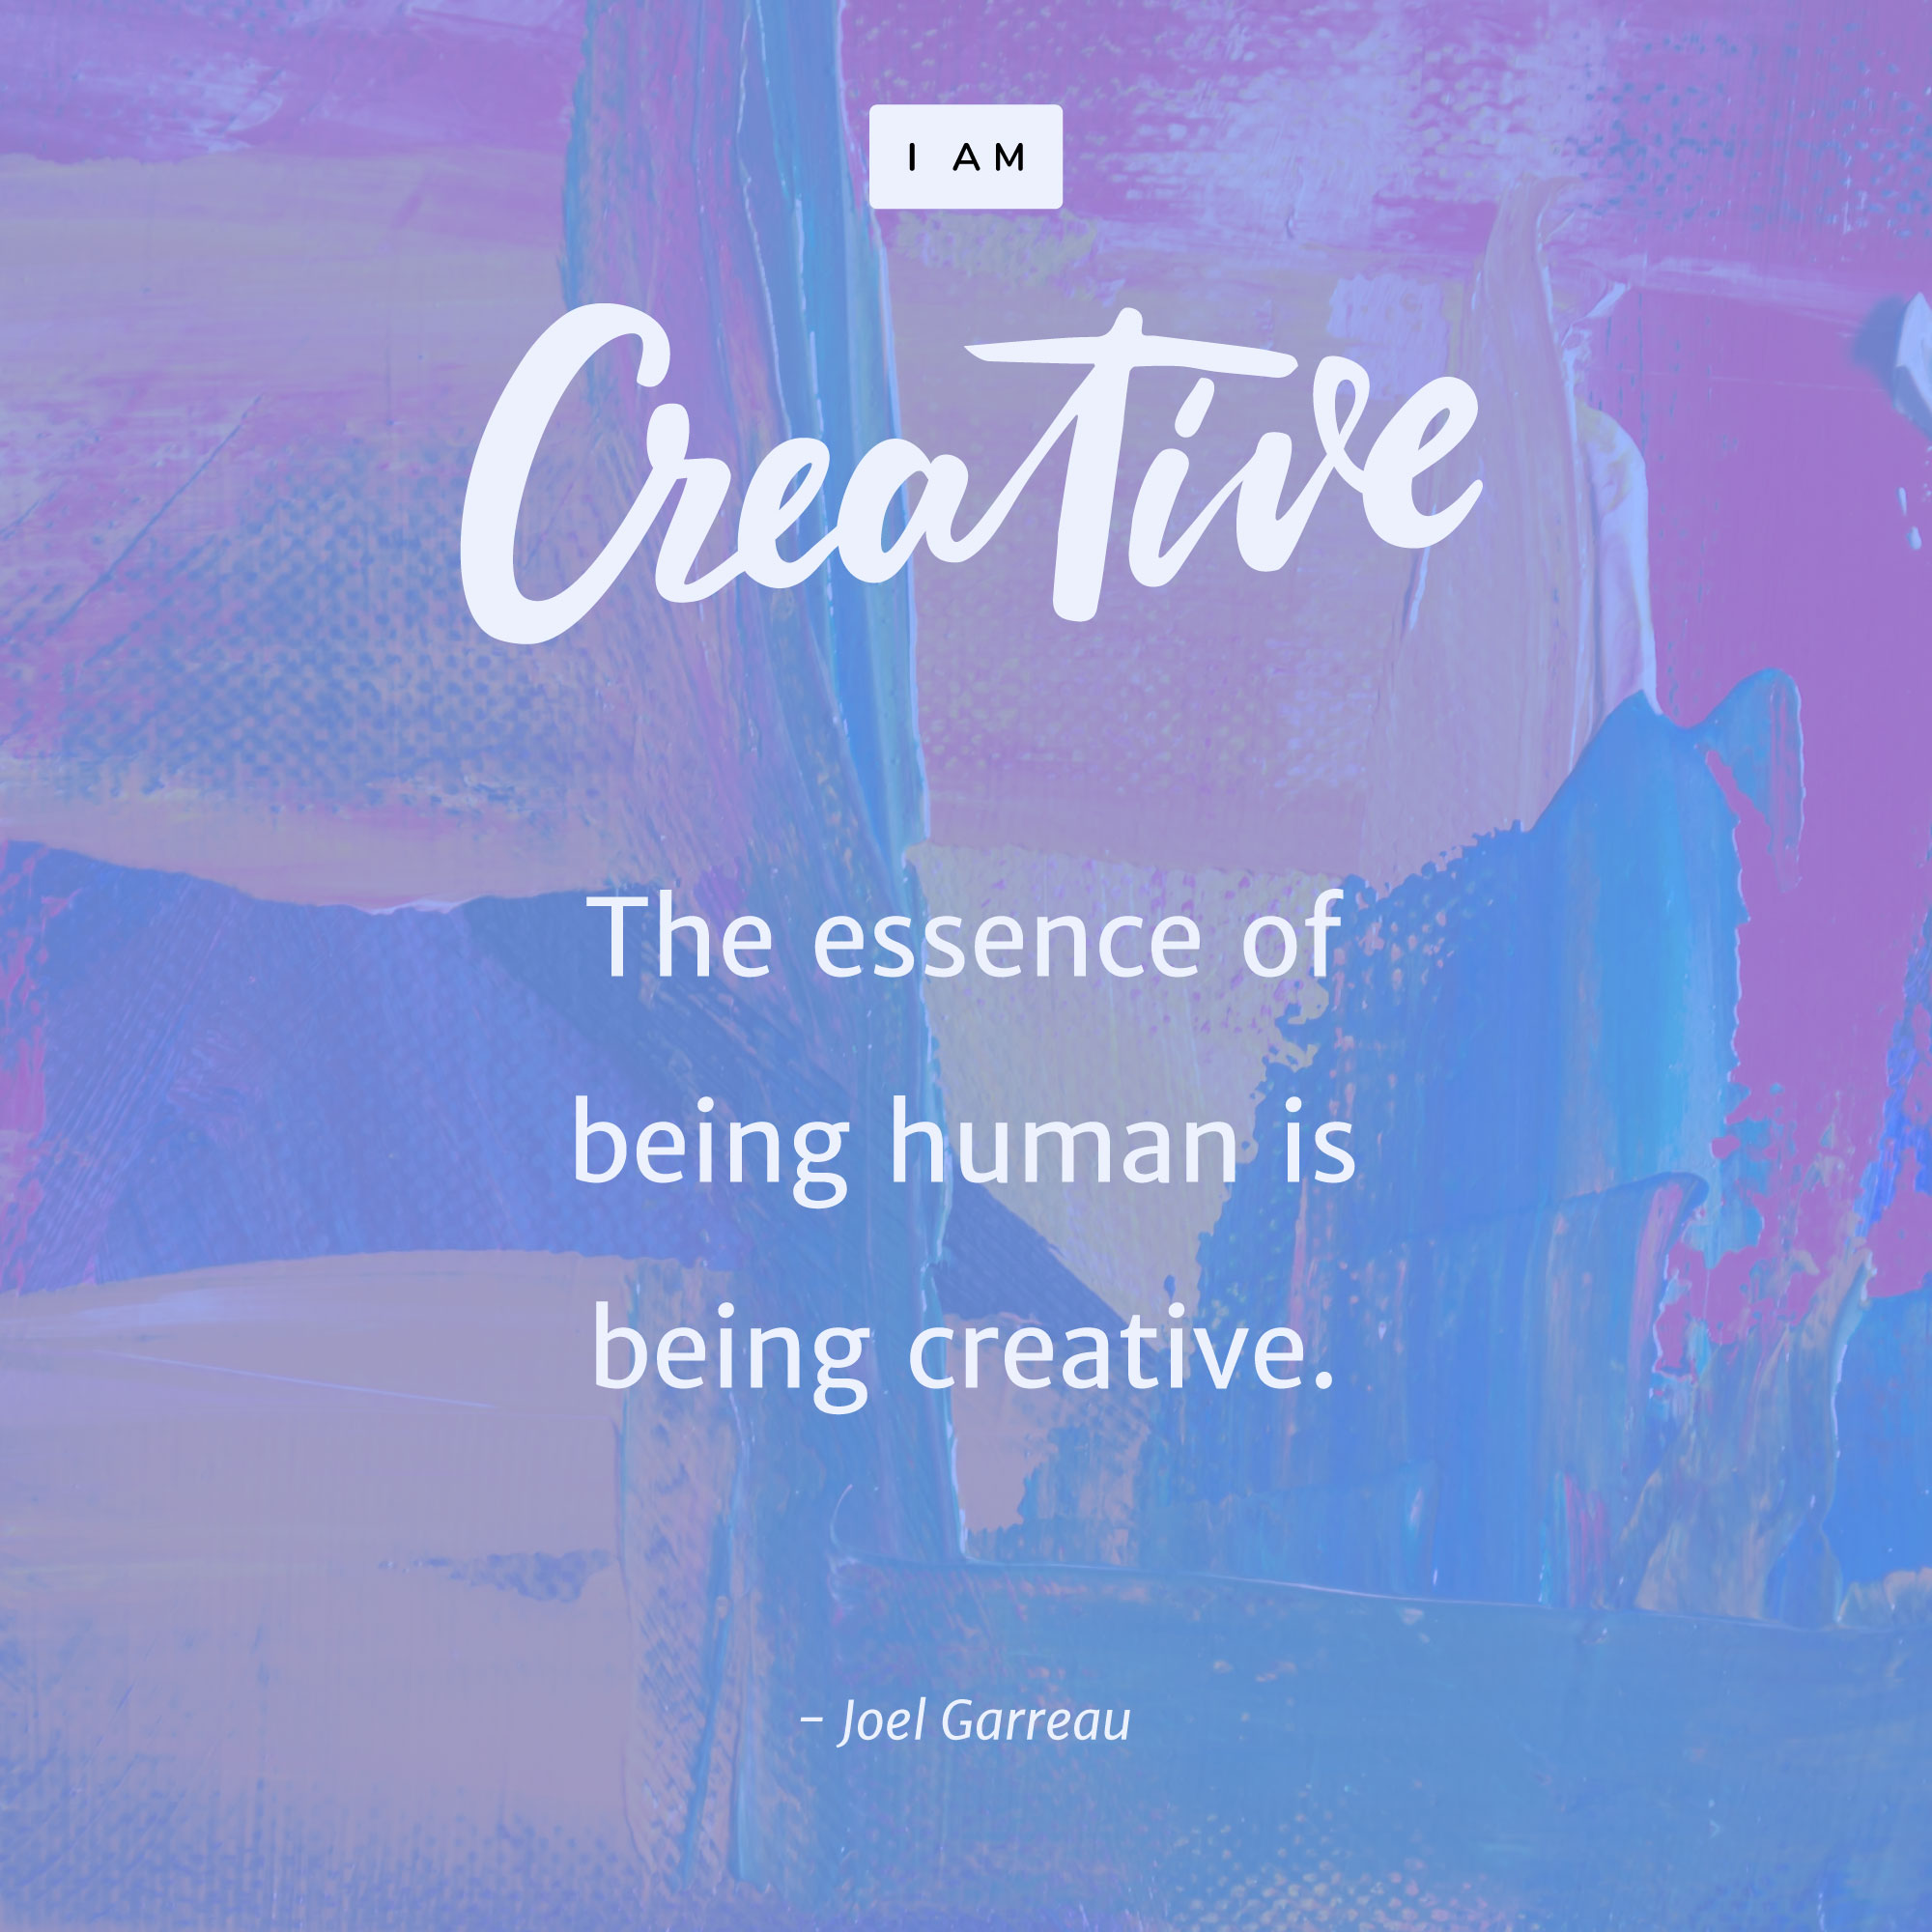 "The essence of being human is being creative." - Joel Garreau